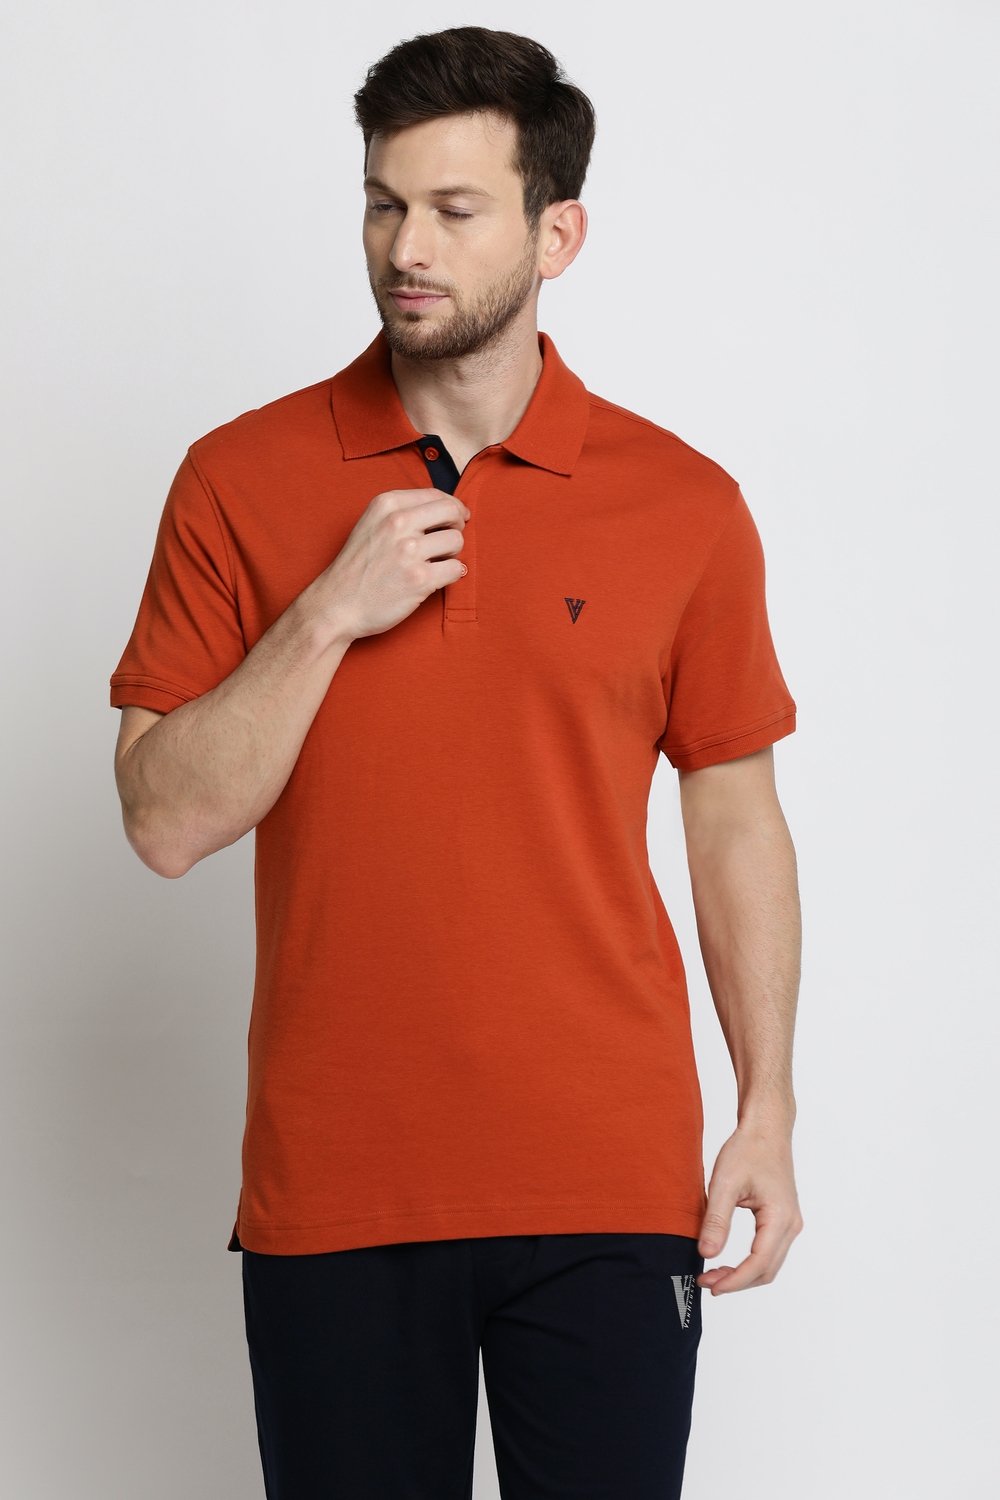 Van Heusen Men's Cotton Orange Polo neck Collar t-shirt